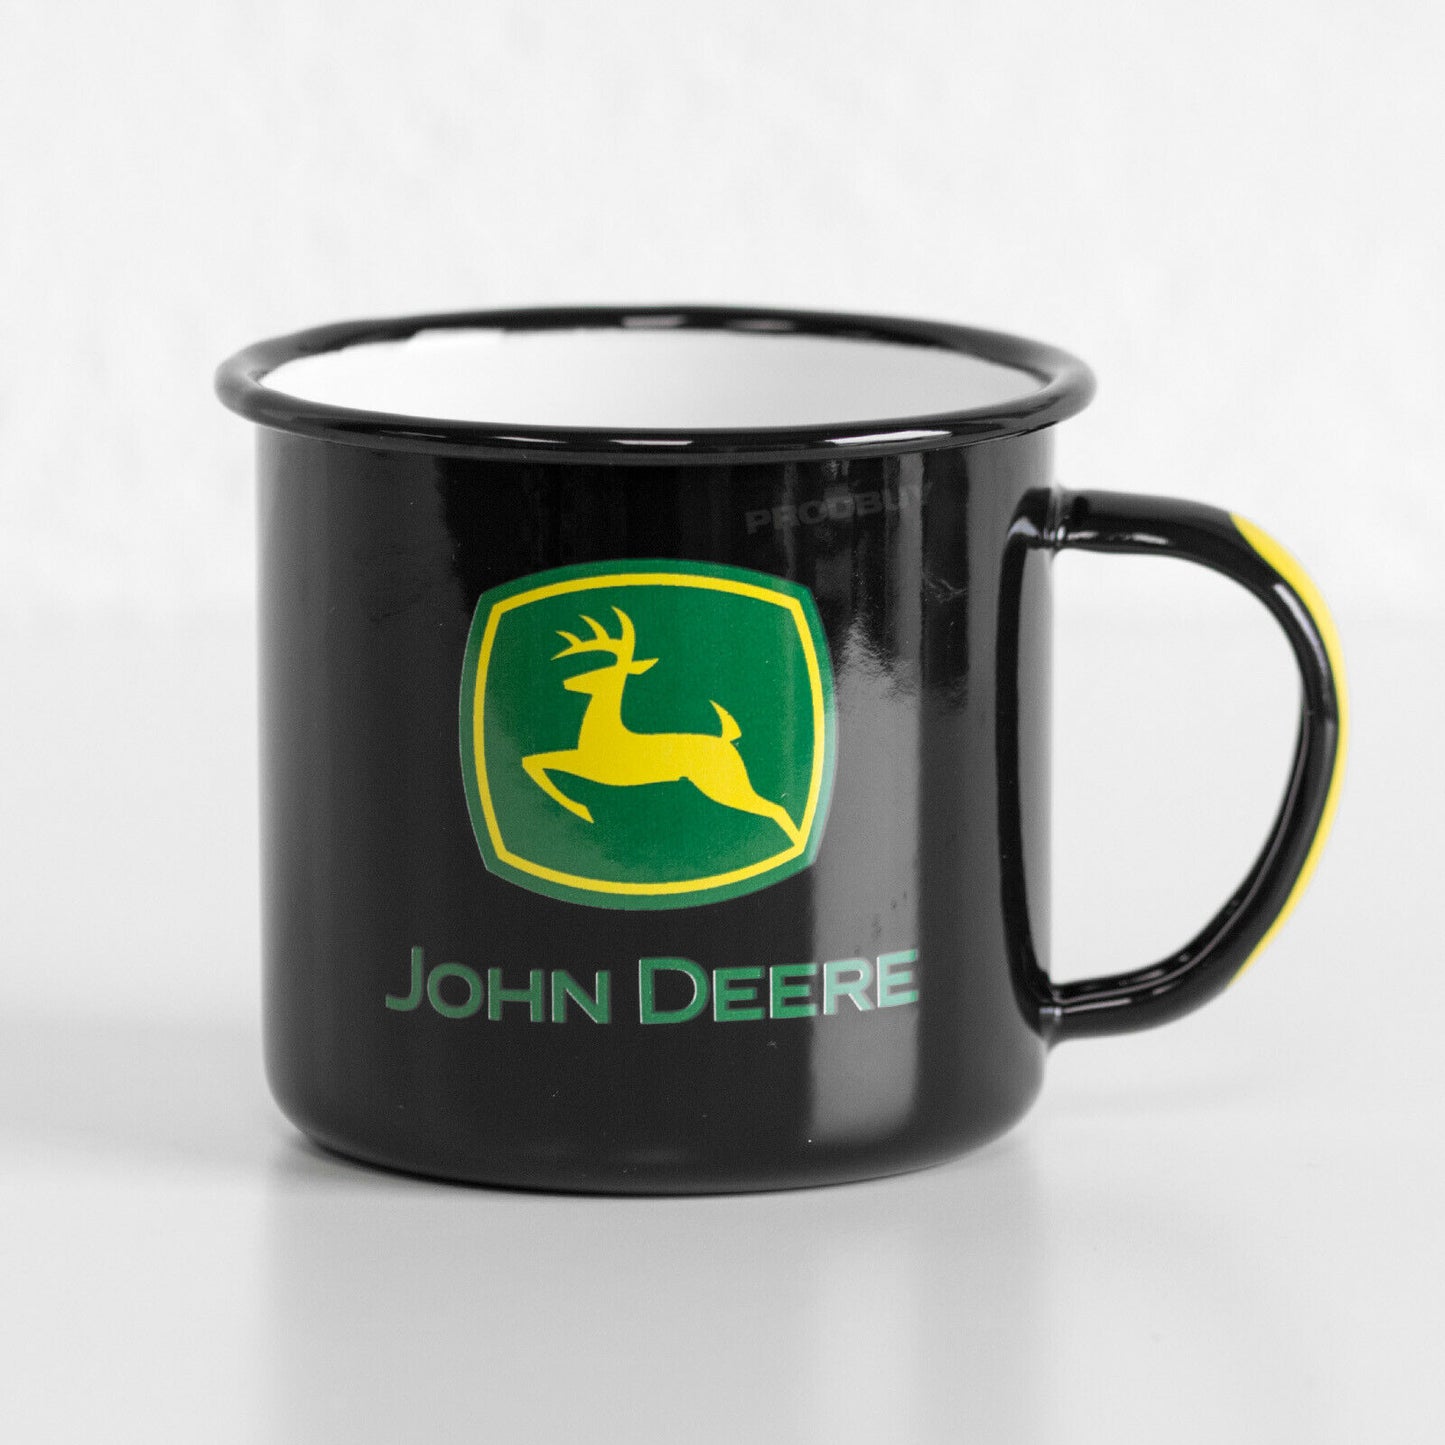 John Deere Black Enamel Mug